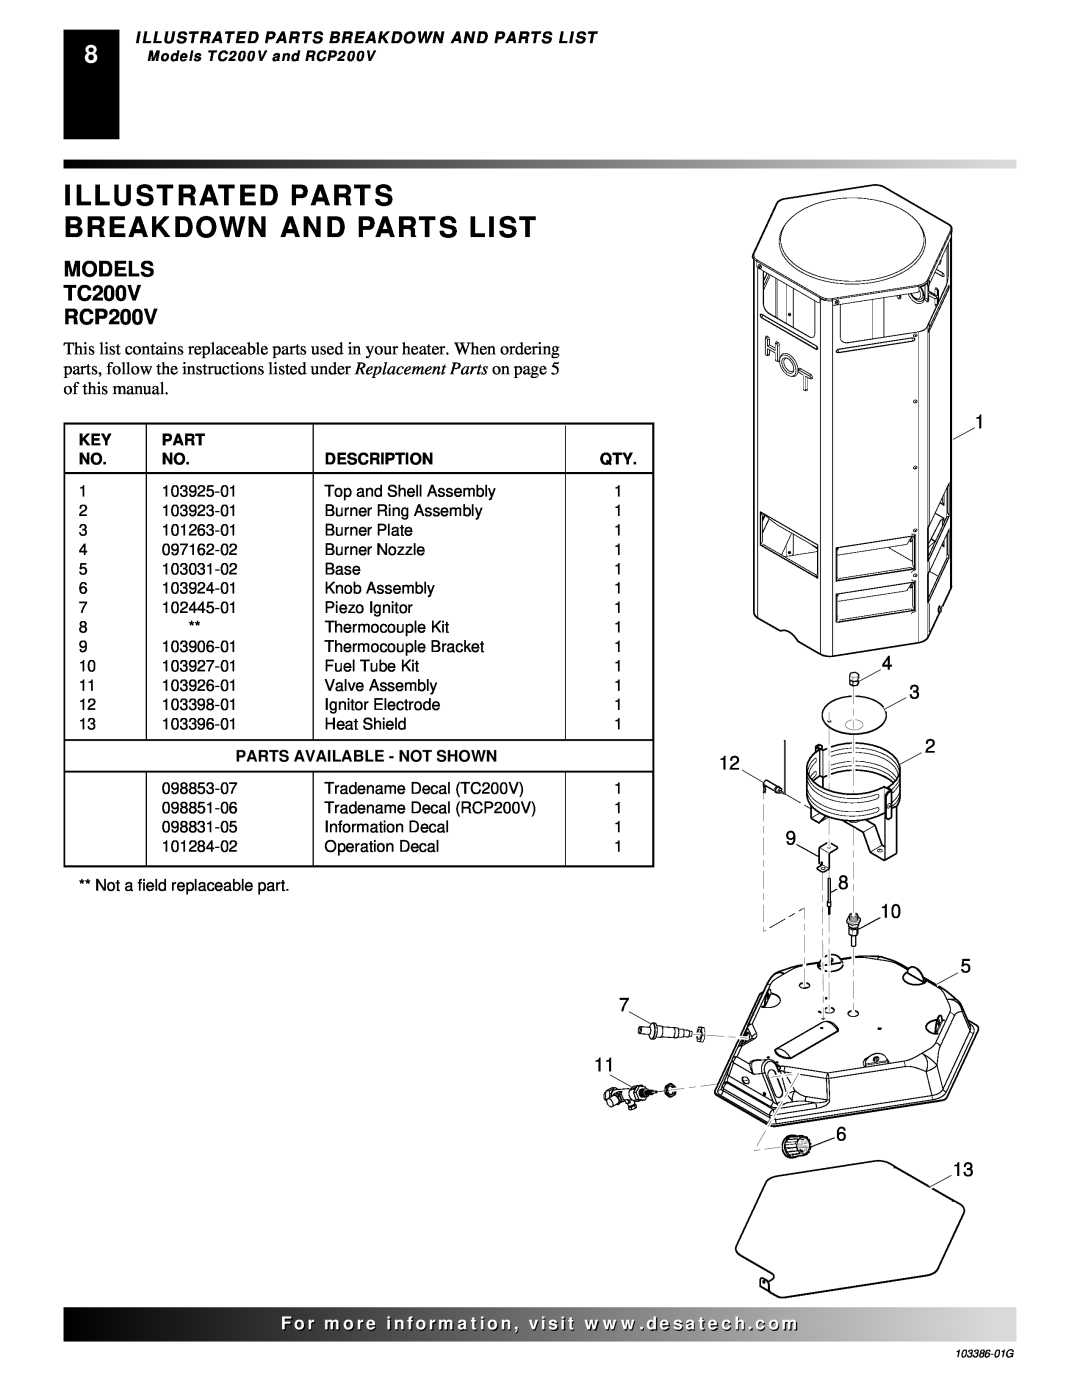 Desa owner manual Illustrated Parts Breakdown And Parts List, MODELS TC200V RCP200V, 1 4 3 